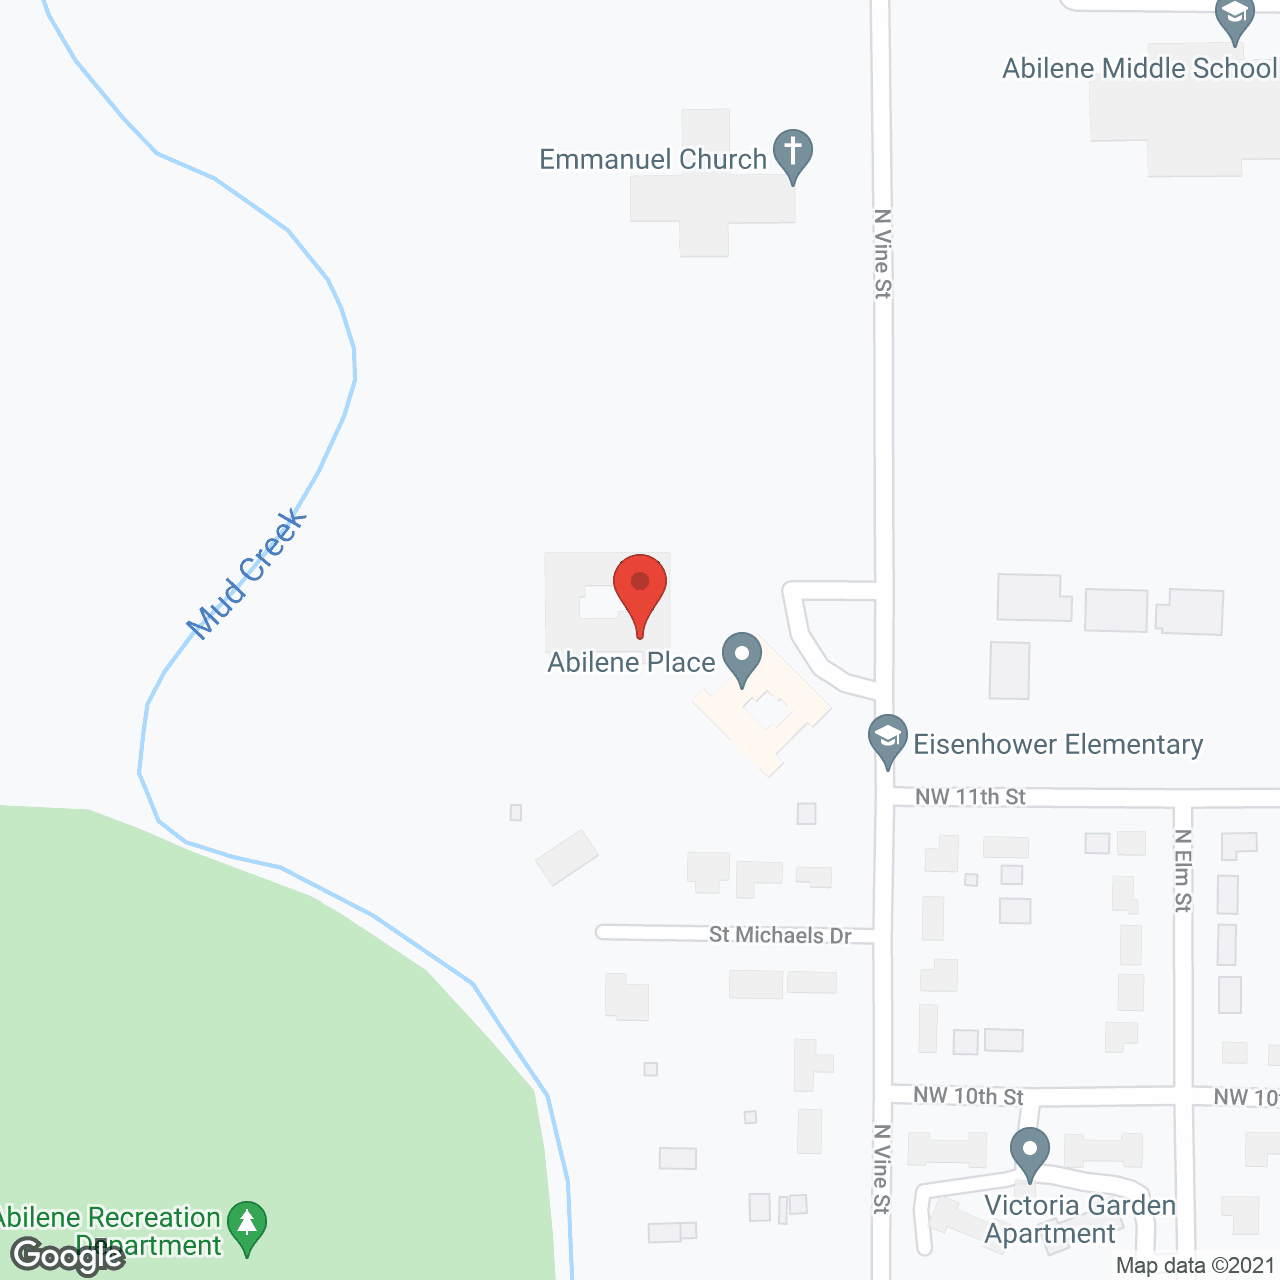 Abilene Place South in google map